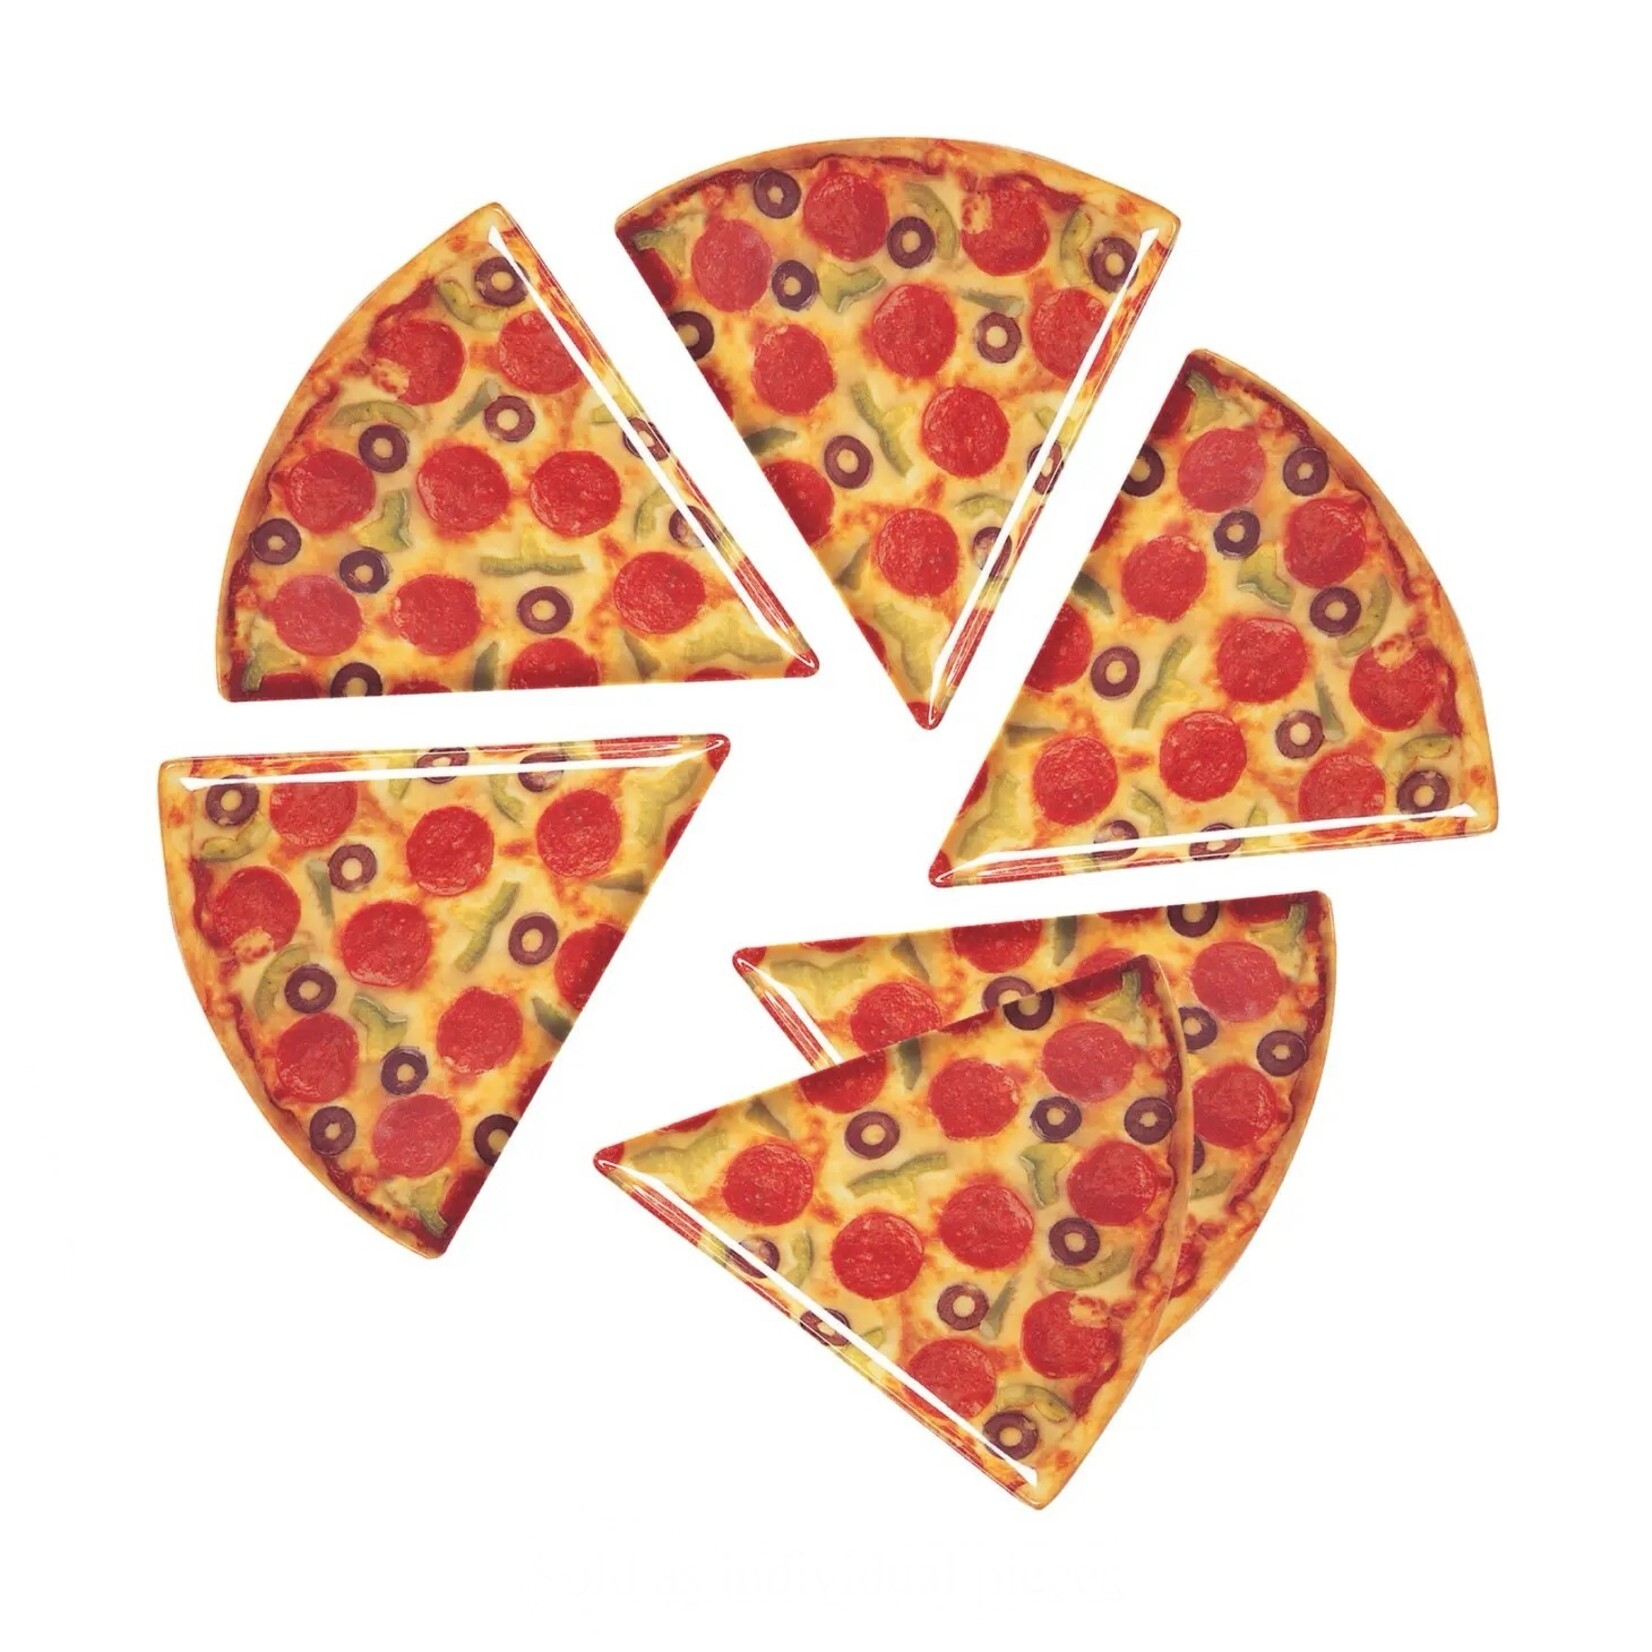 Pizza melamine plate